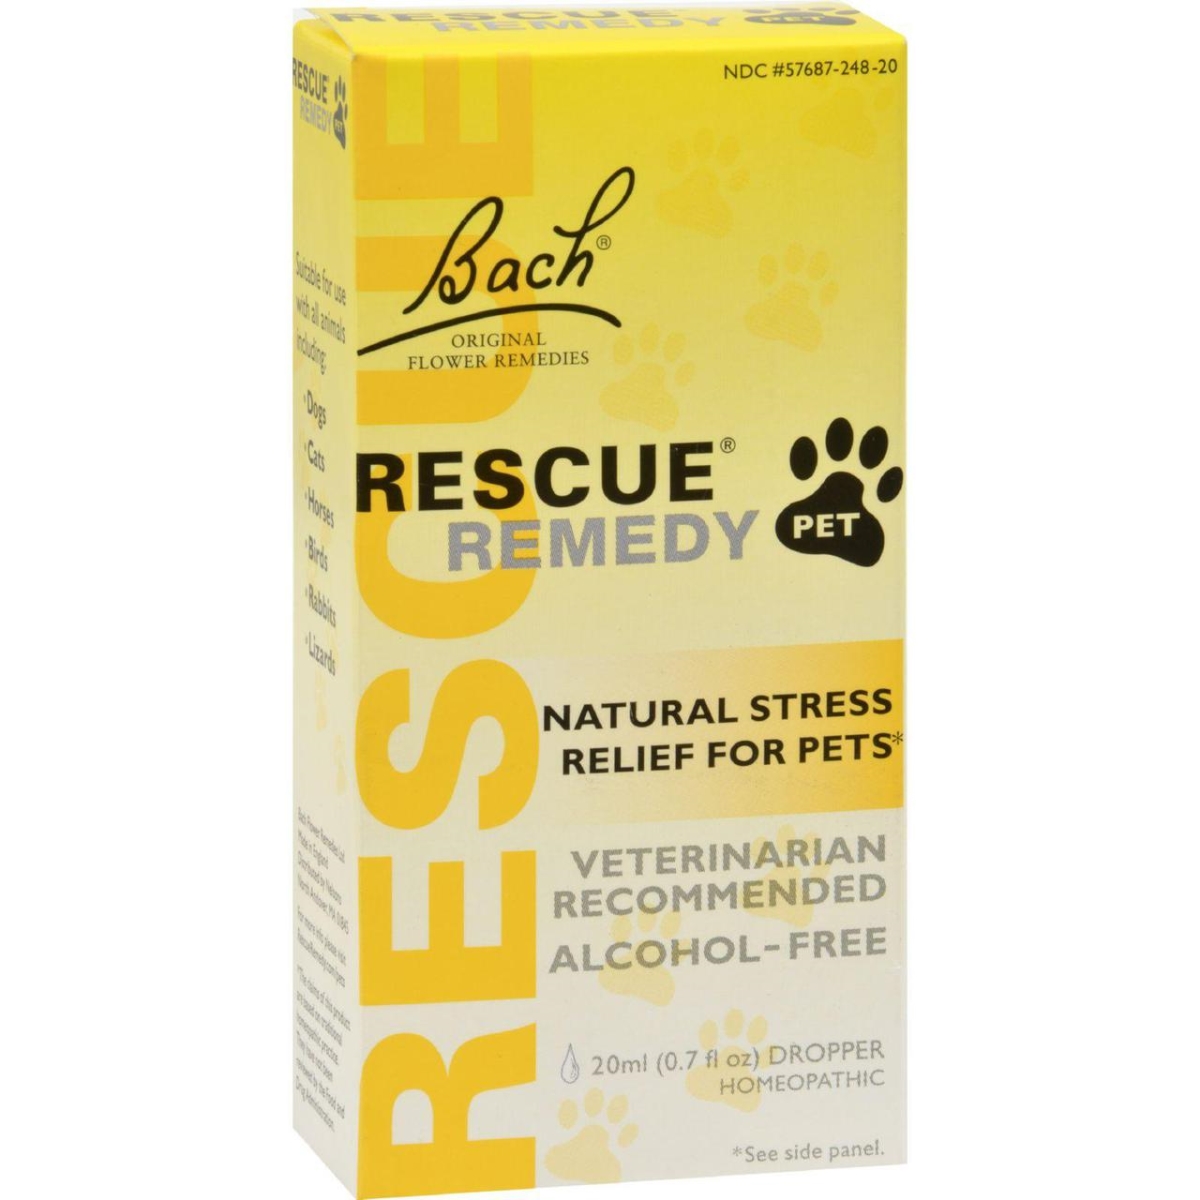 Hg0158931 20 Ml Rescue Remedy Pet